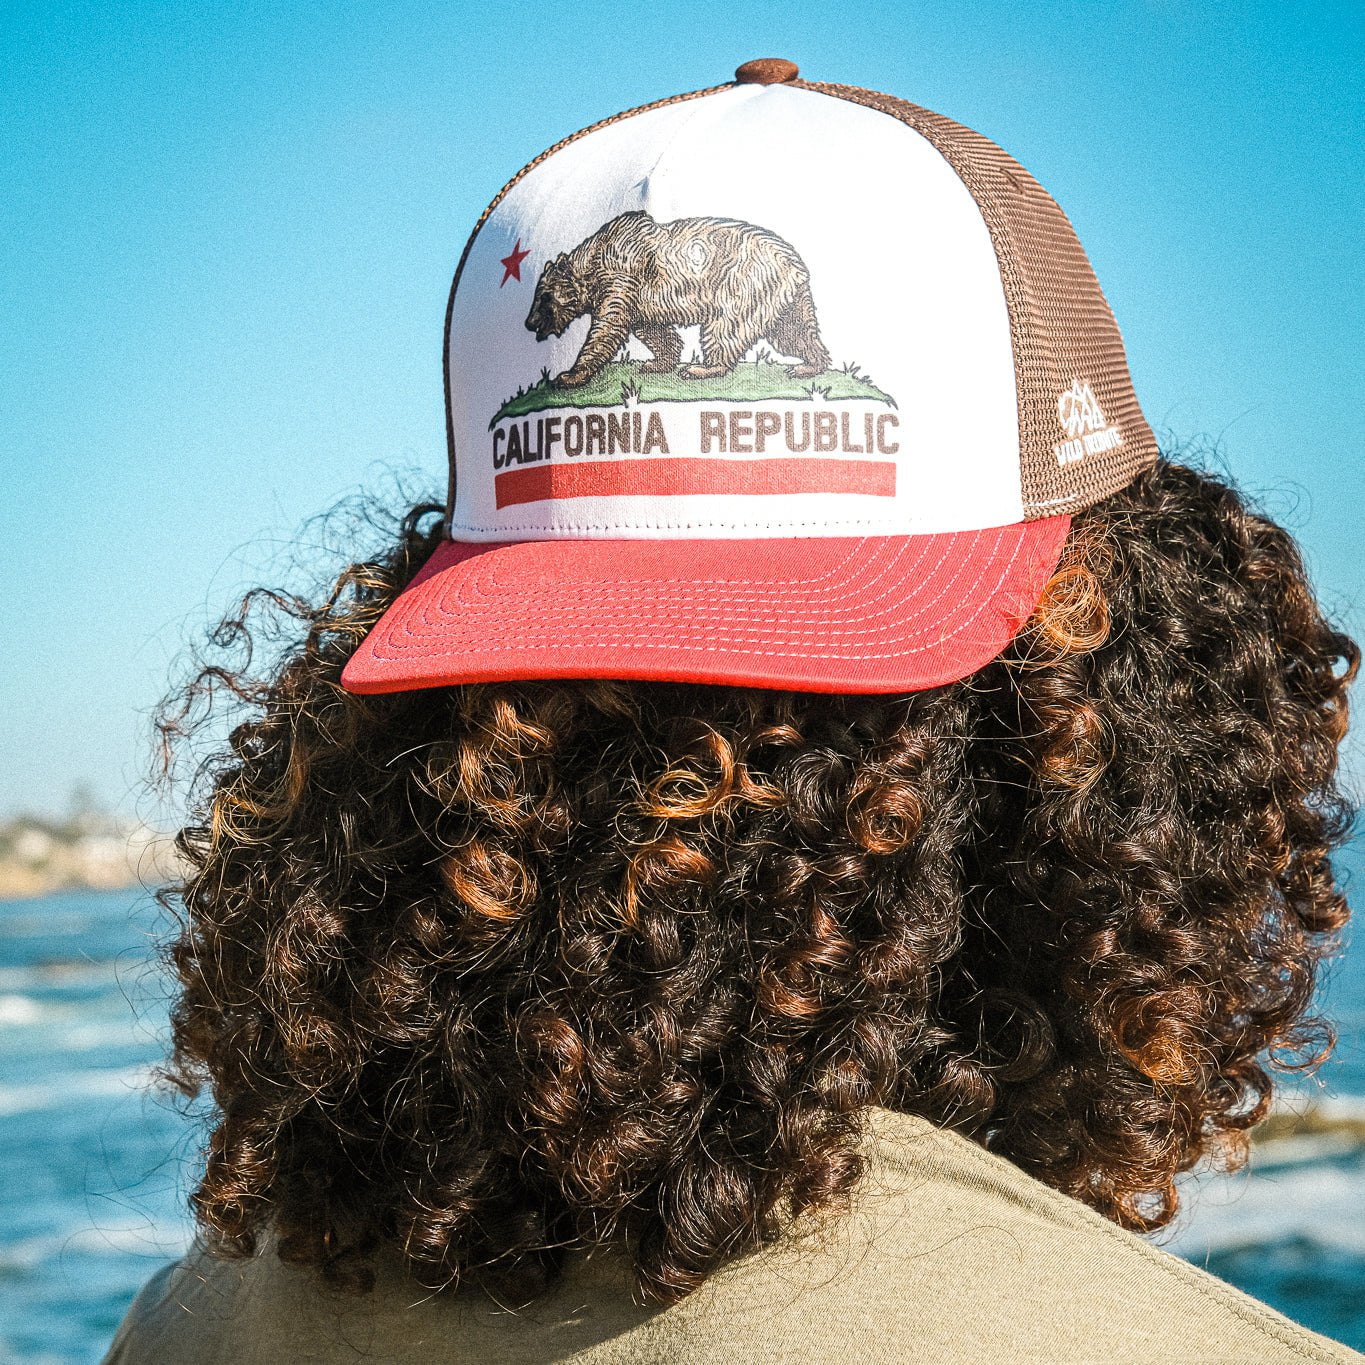 Republic of California Trucker Hat